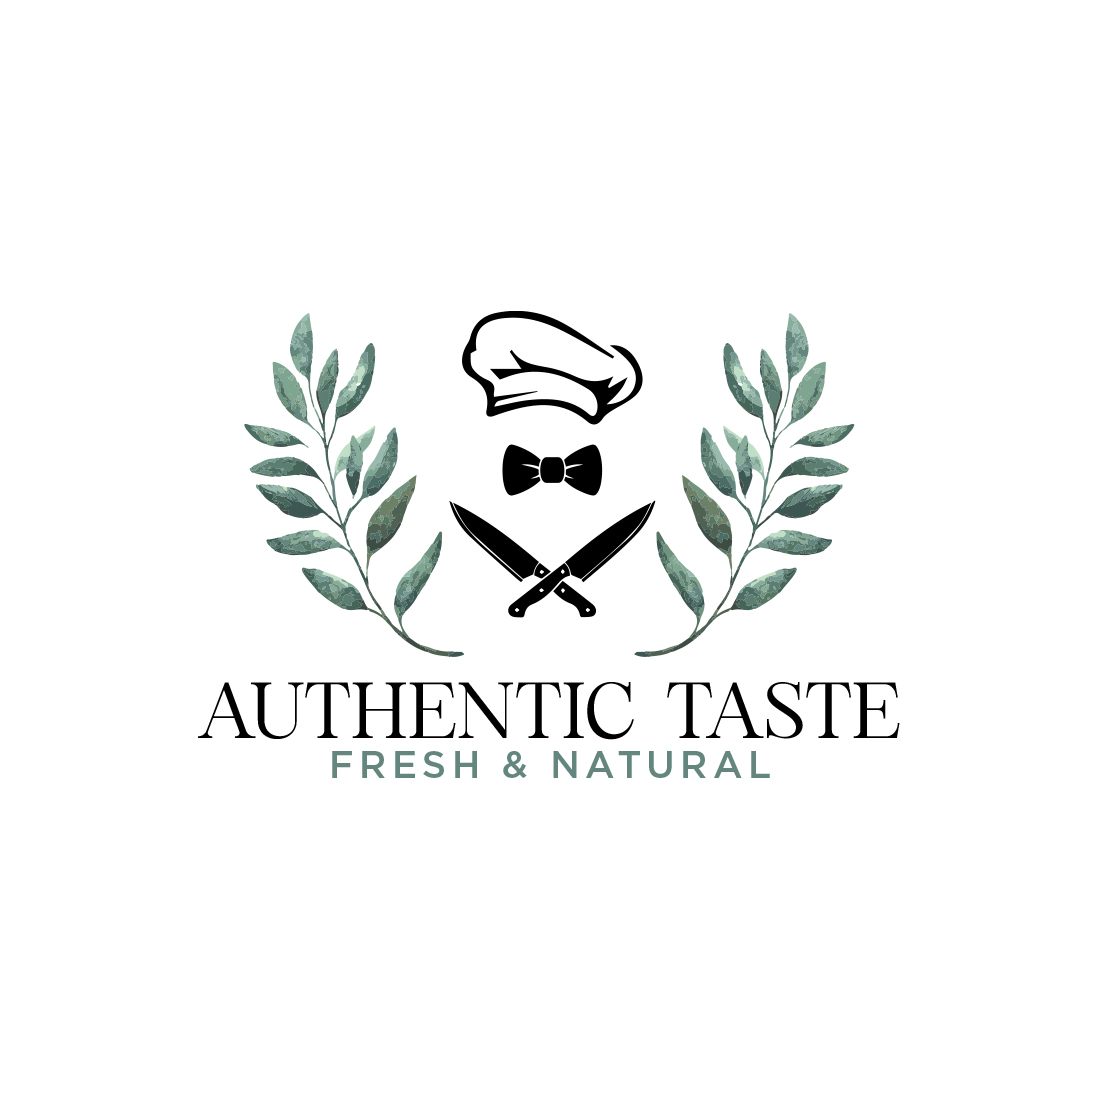 Authentic Taste Food Logo Design cover image.